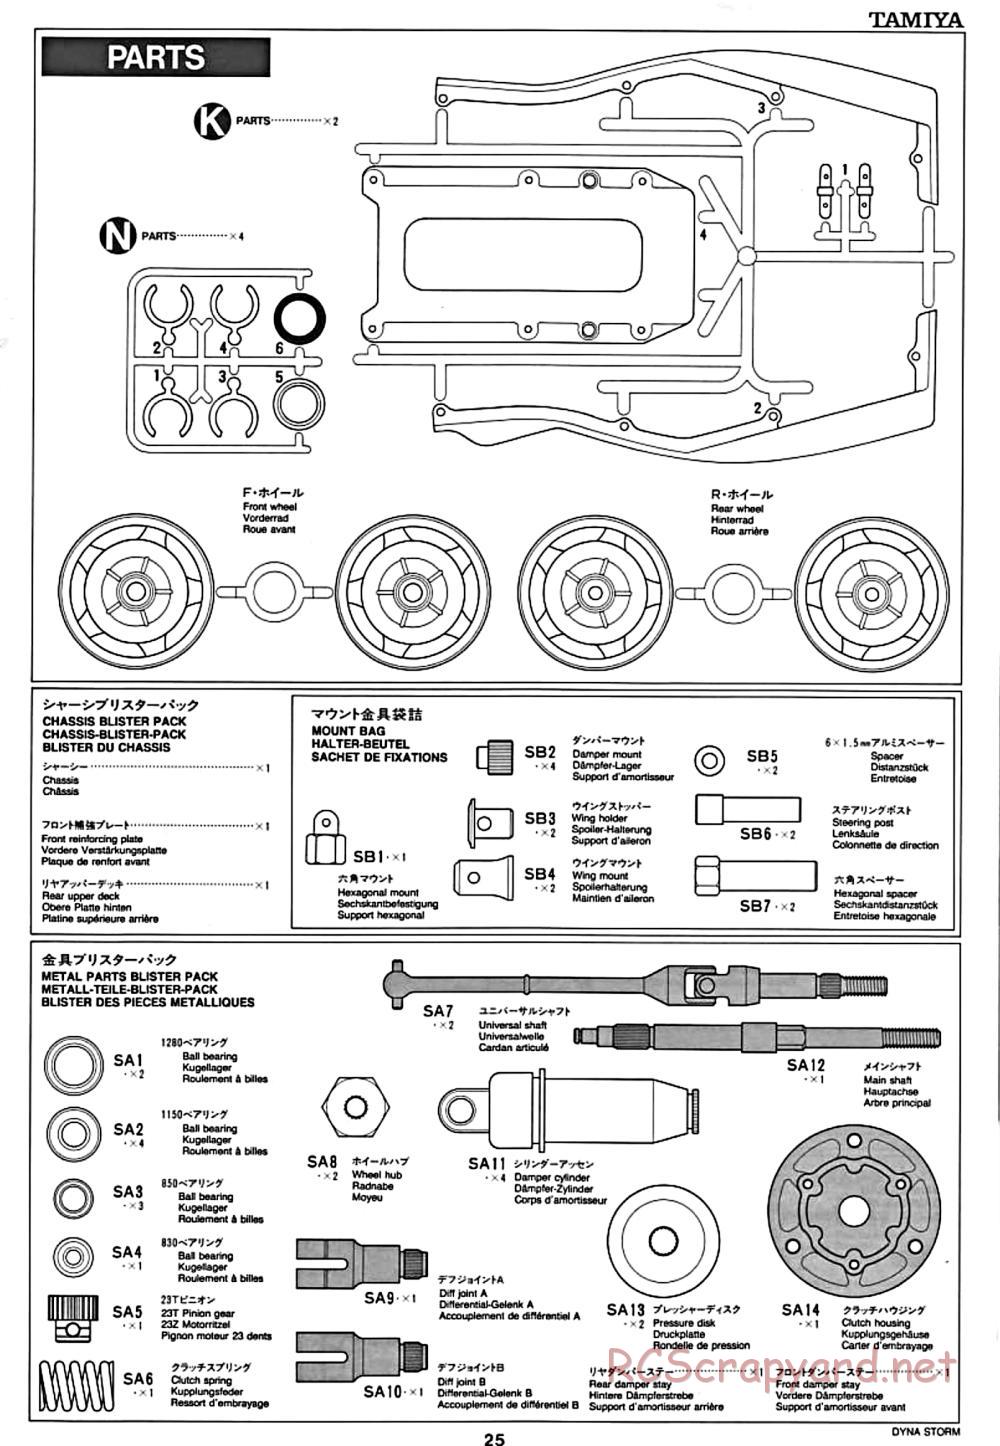 Tamiya - Dyna Storm Chassis - Manual - Page 25